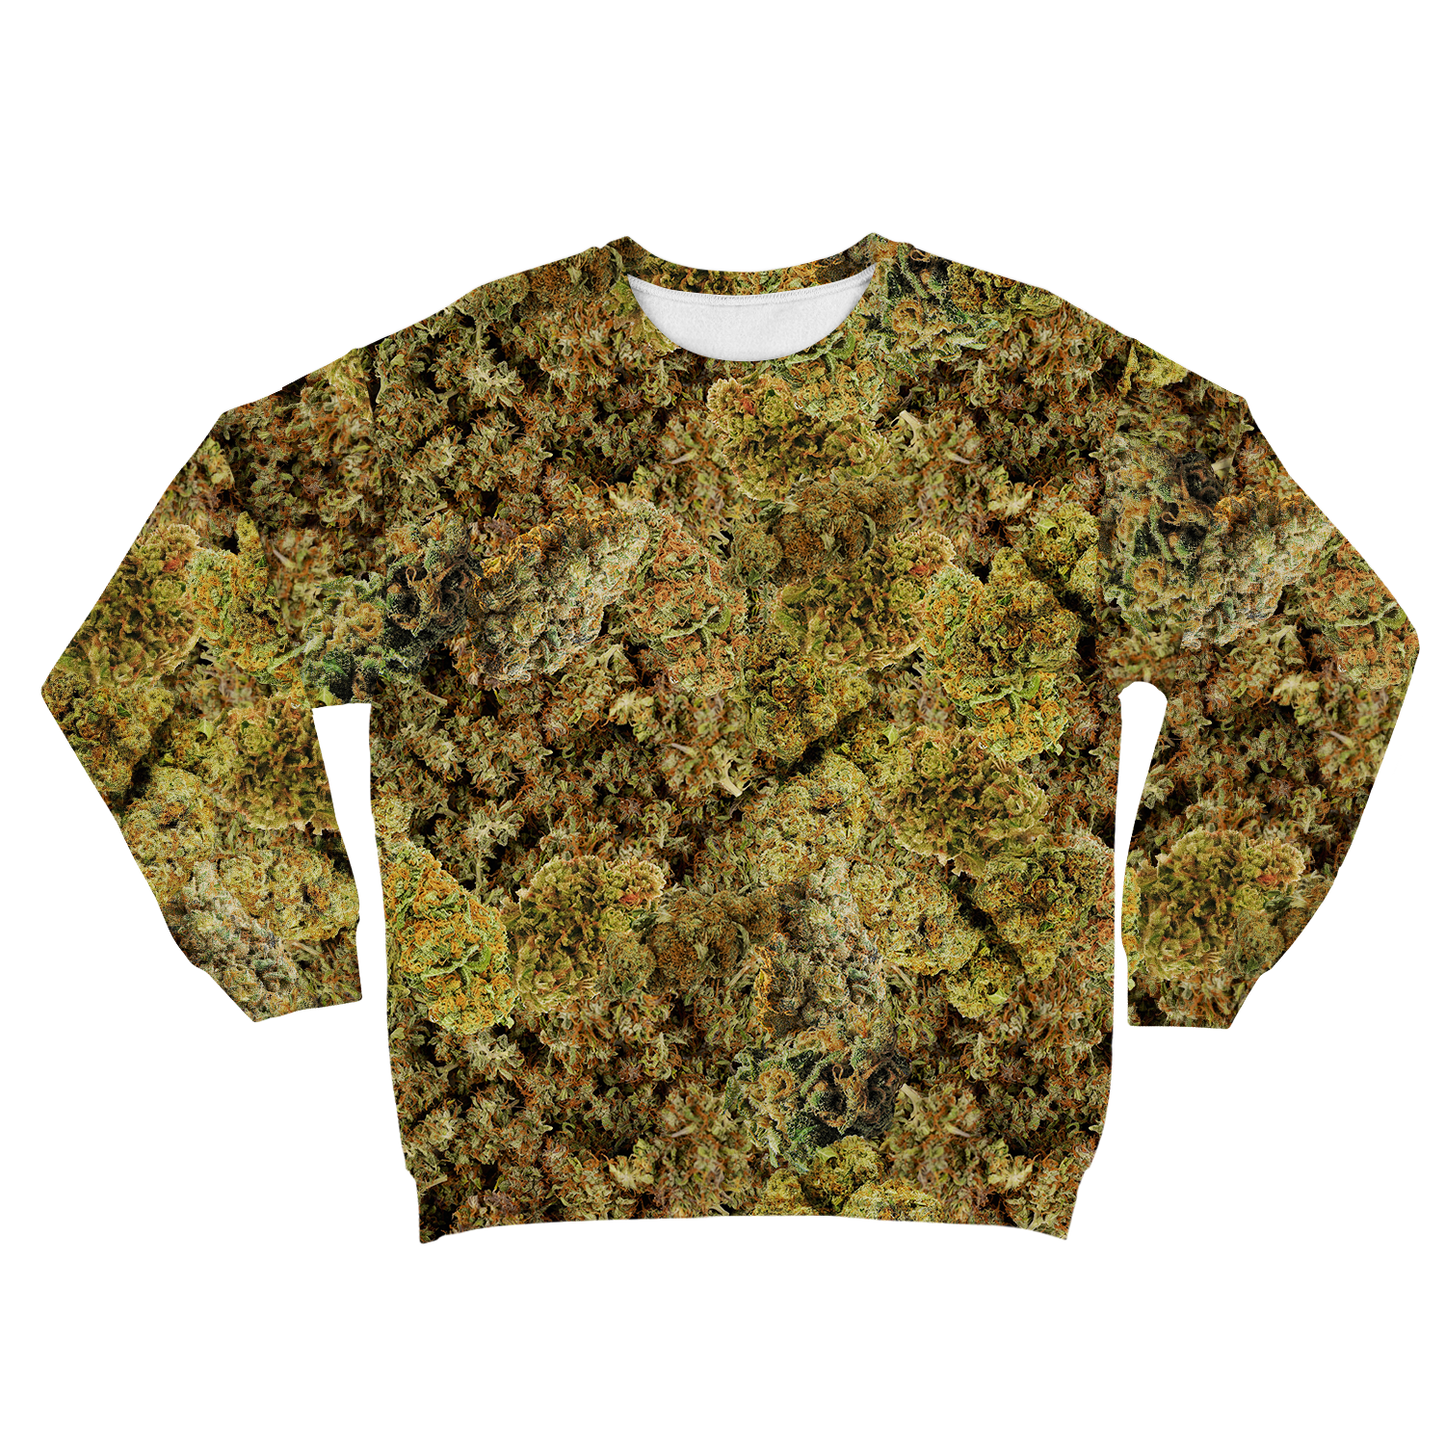 Cann~ Buds All Over Print Unisex Sweatshirt